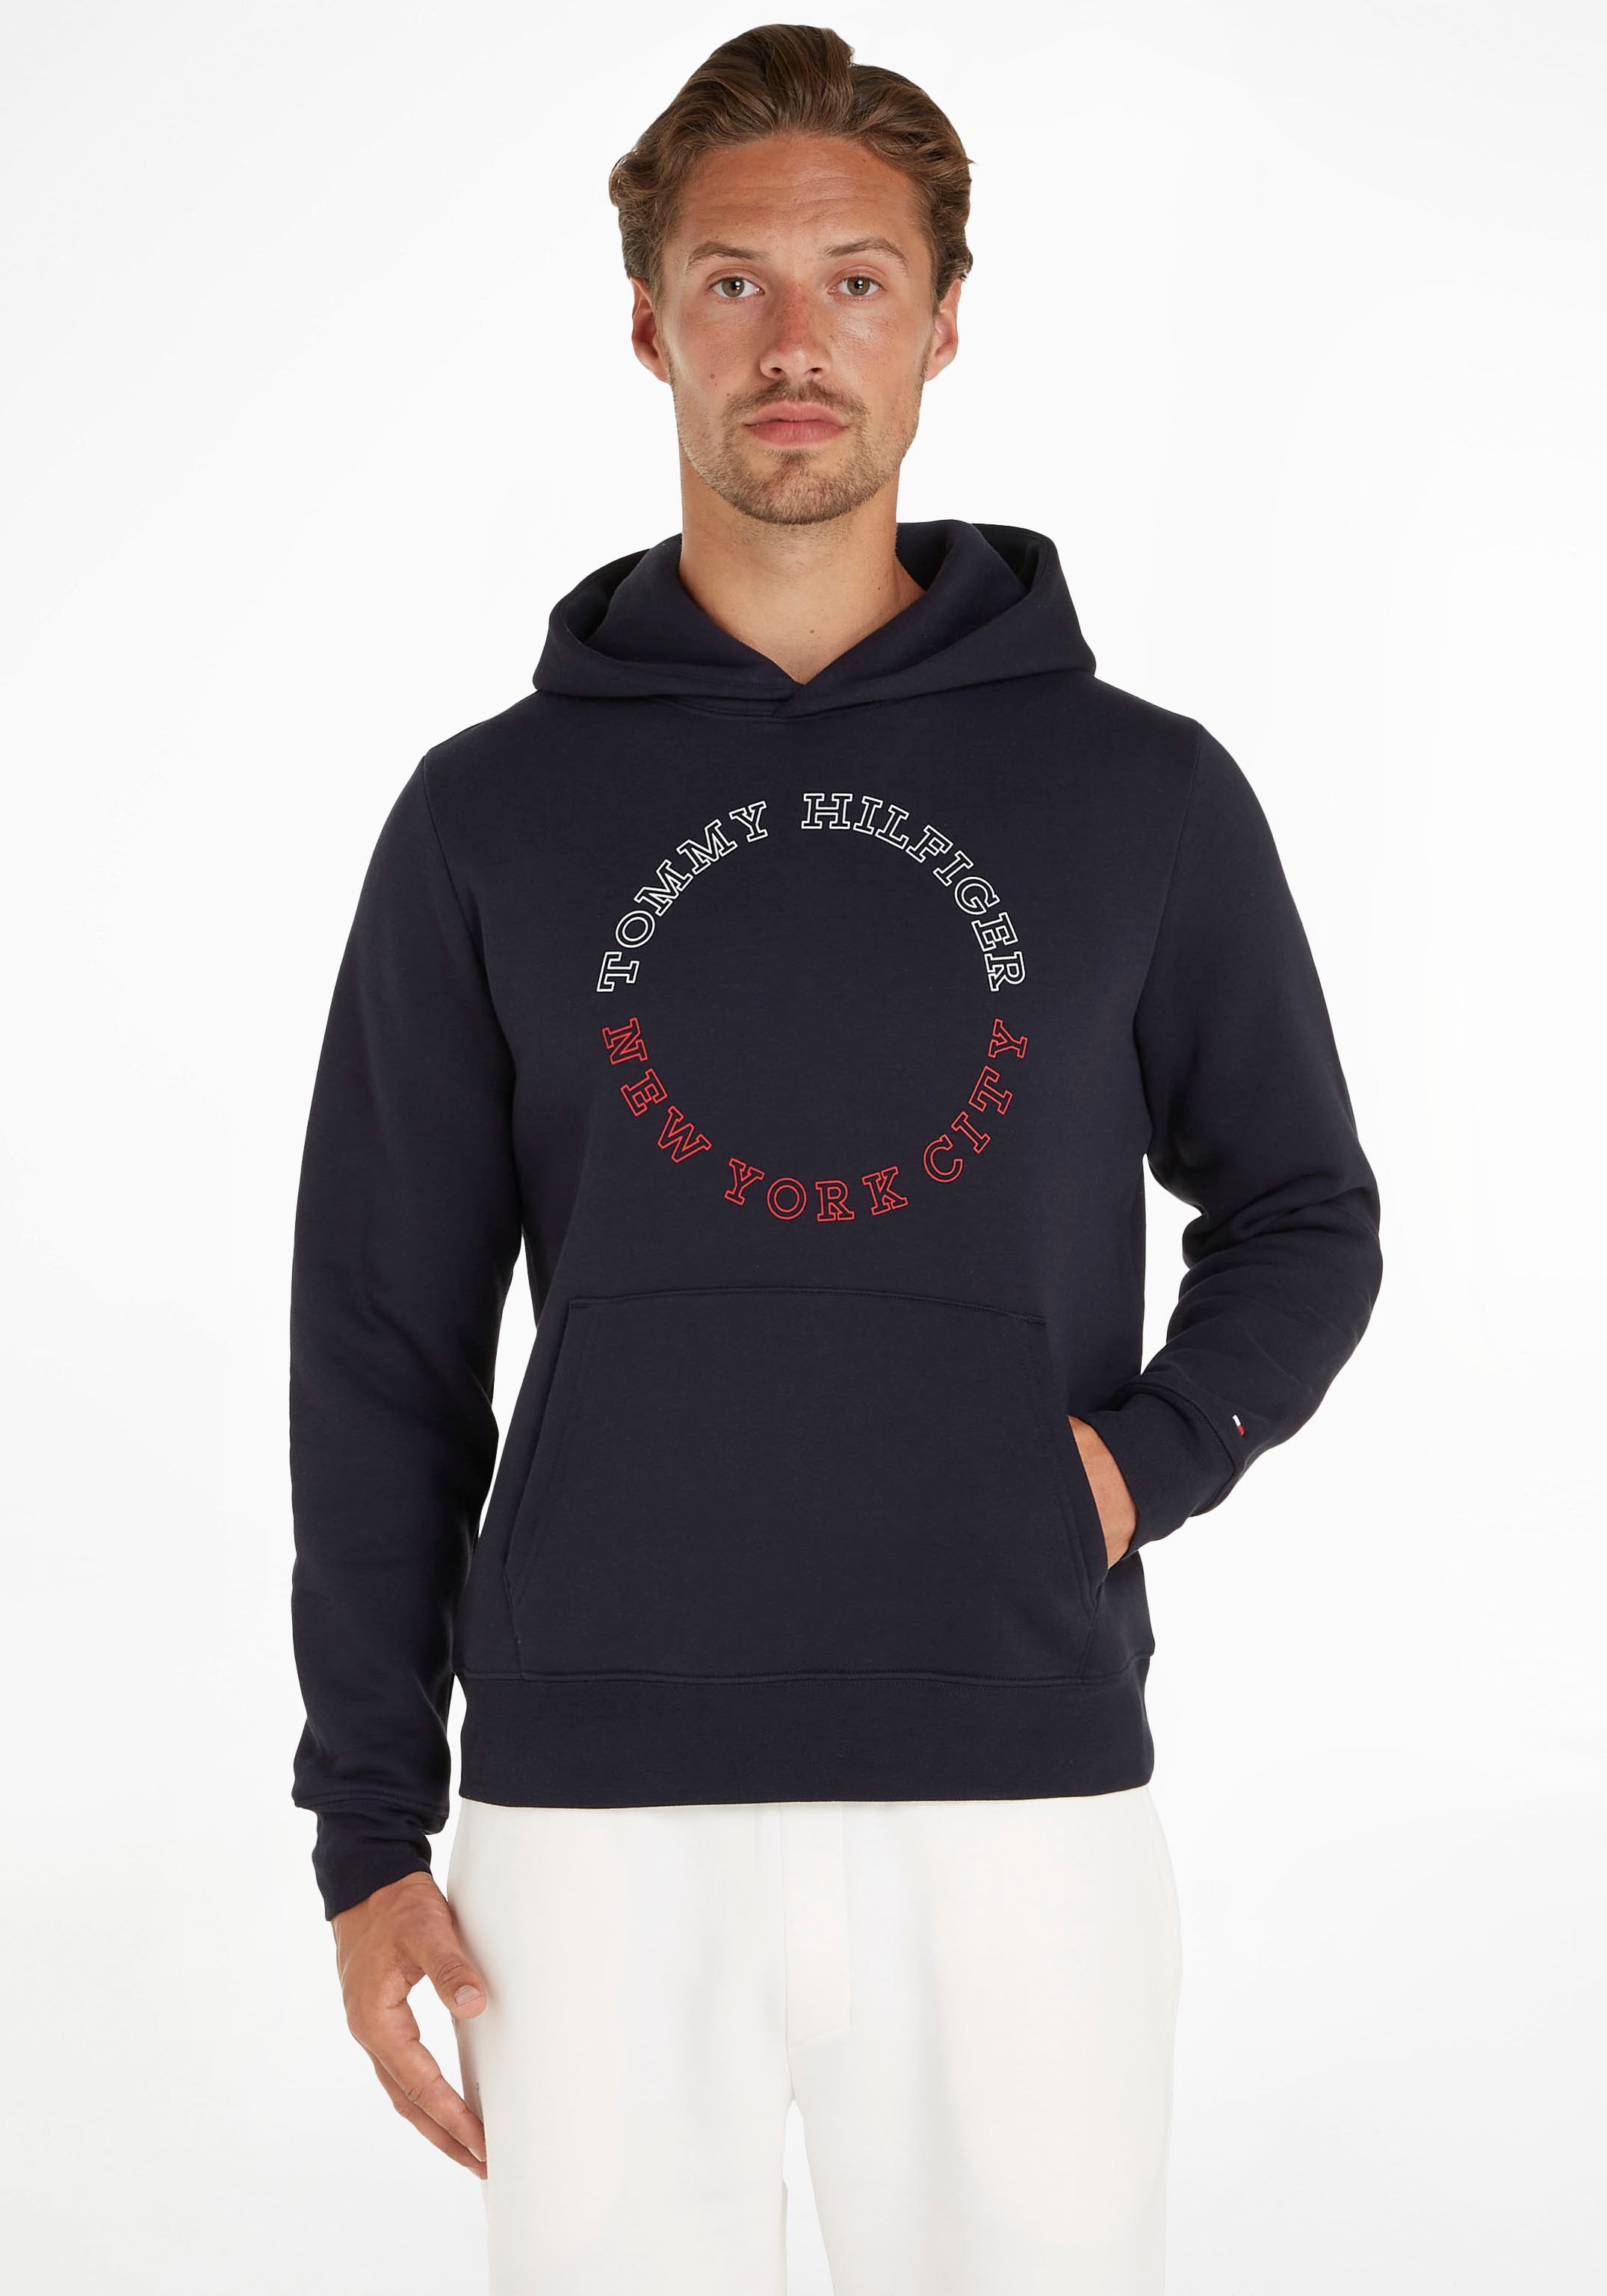 Tommy Hilfiger online Kapuzensweatshirt OTTO bestellen HOODY« ROUNDALL »MONOTYPE bei